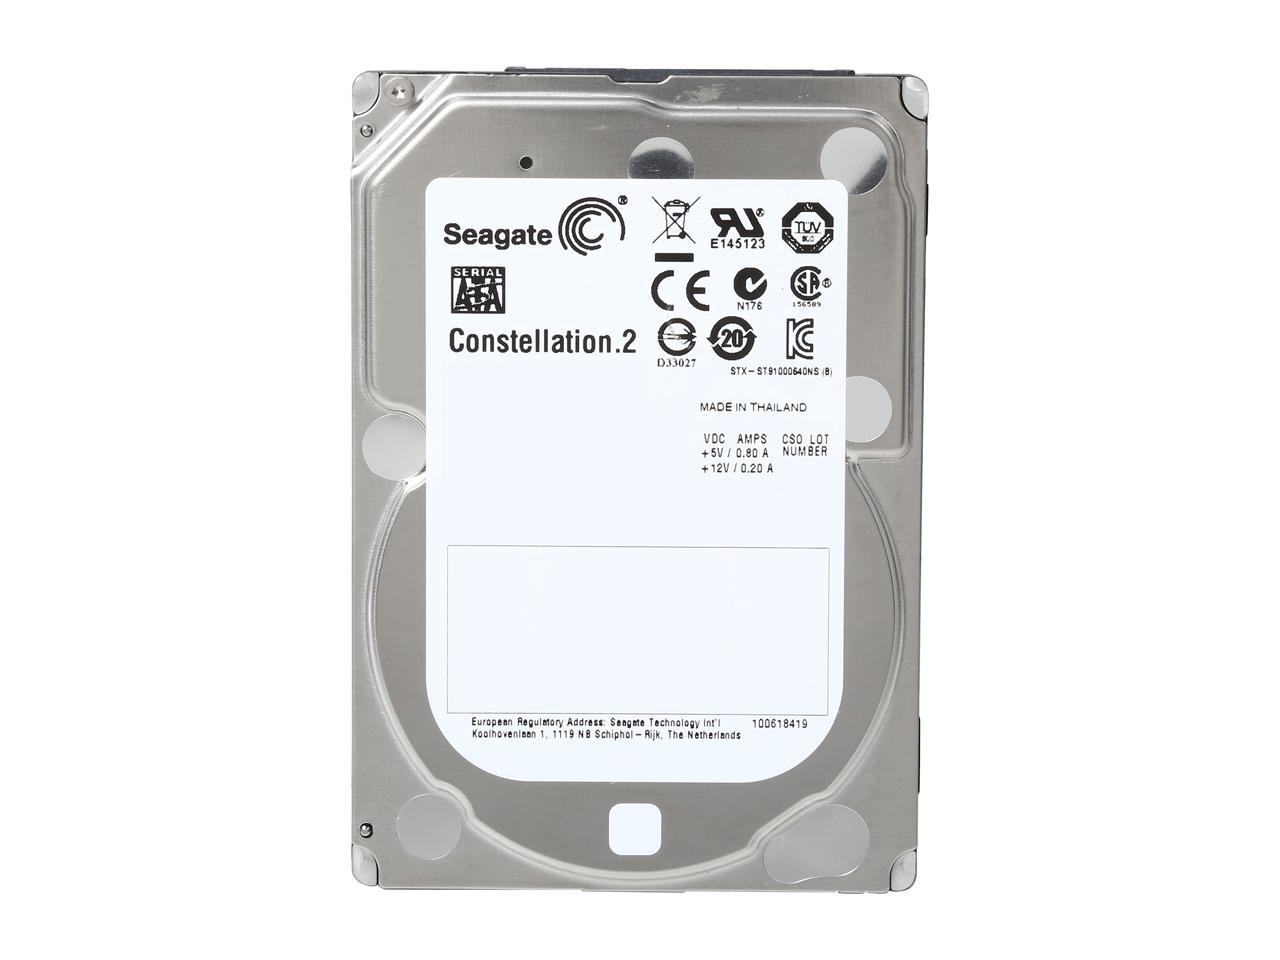 Seagate Constellation.2 ST9500620NS 500GB 7200 RPM 64MB Cache SATA 6.0Gb/s 2.5" Enterprise-class Internal Hard Drive Bare Drive